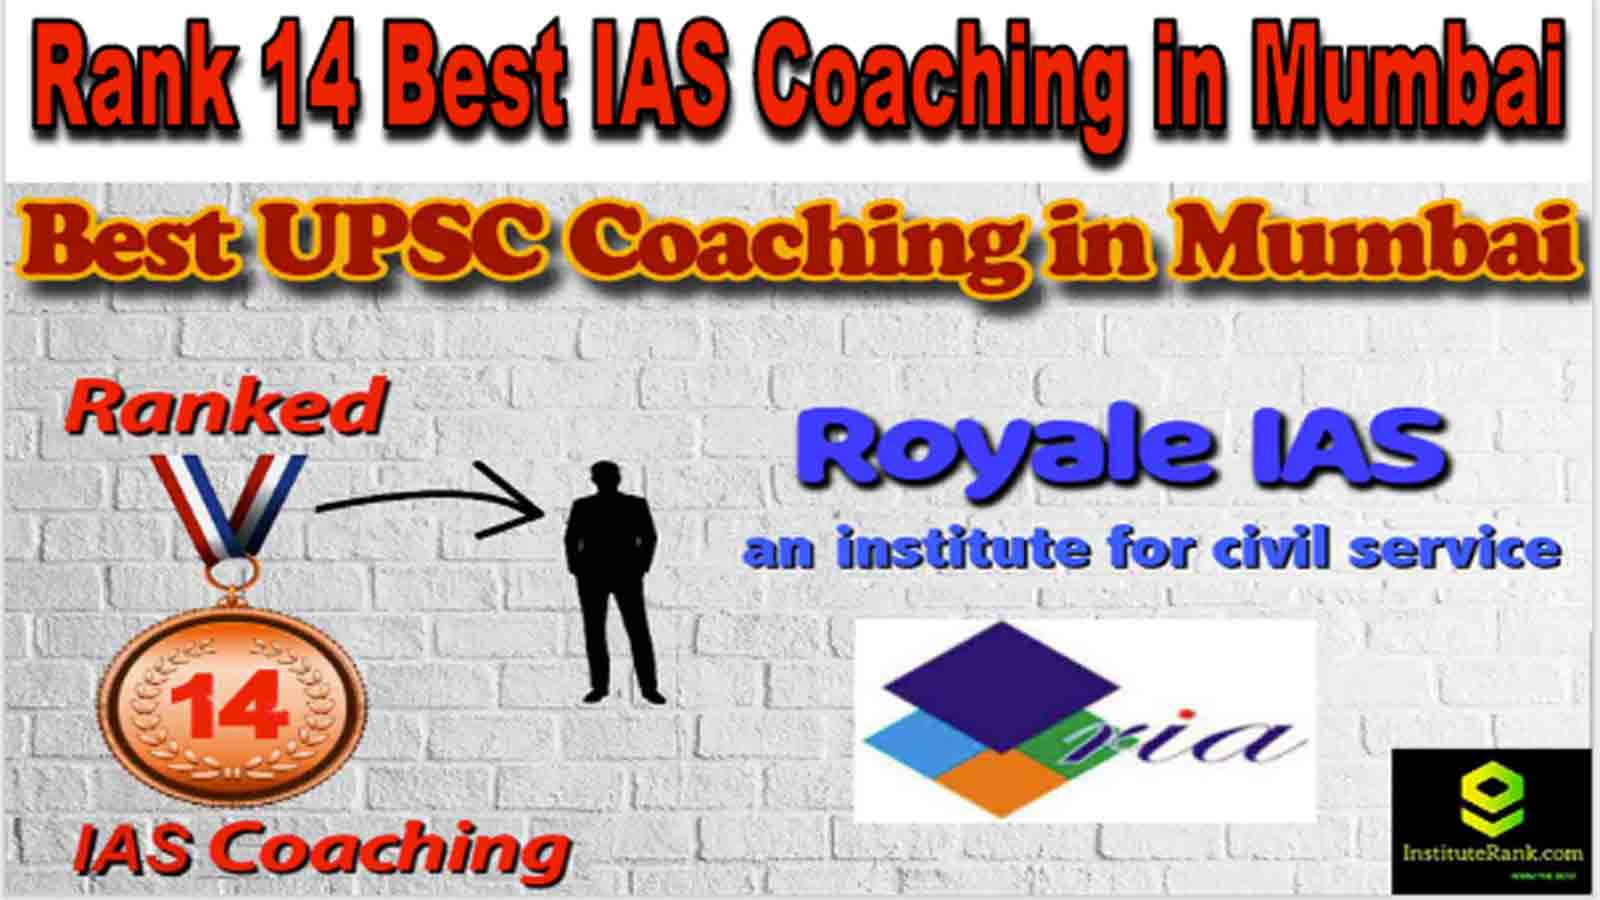 Rank 14 Best IAS Coaching in Mumbai